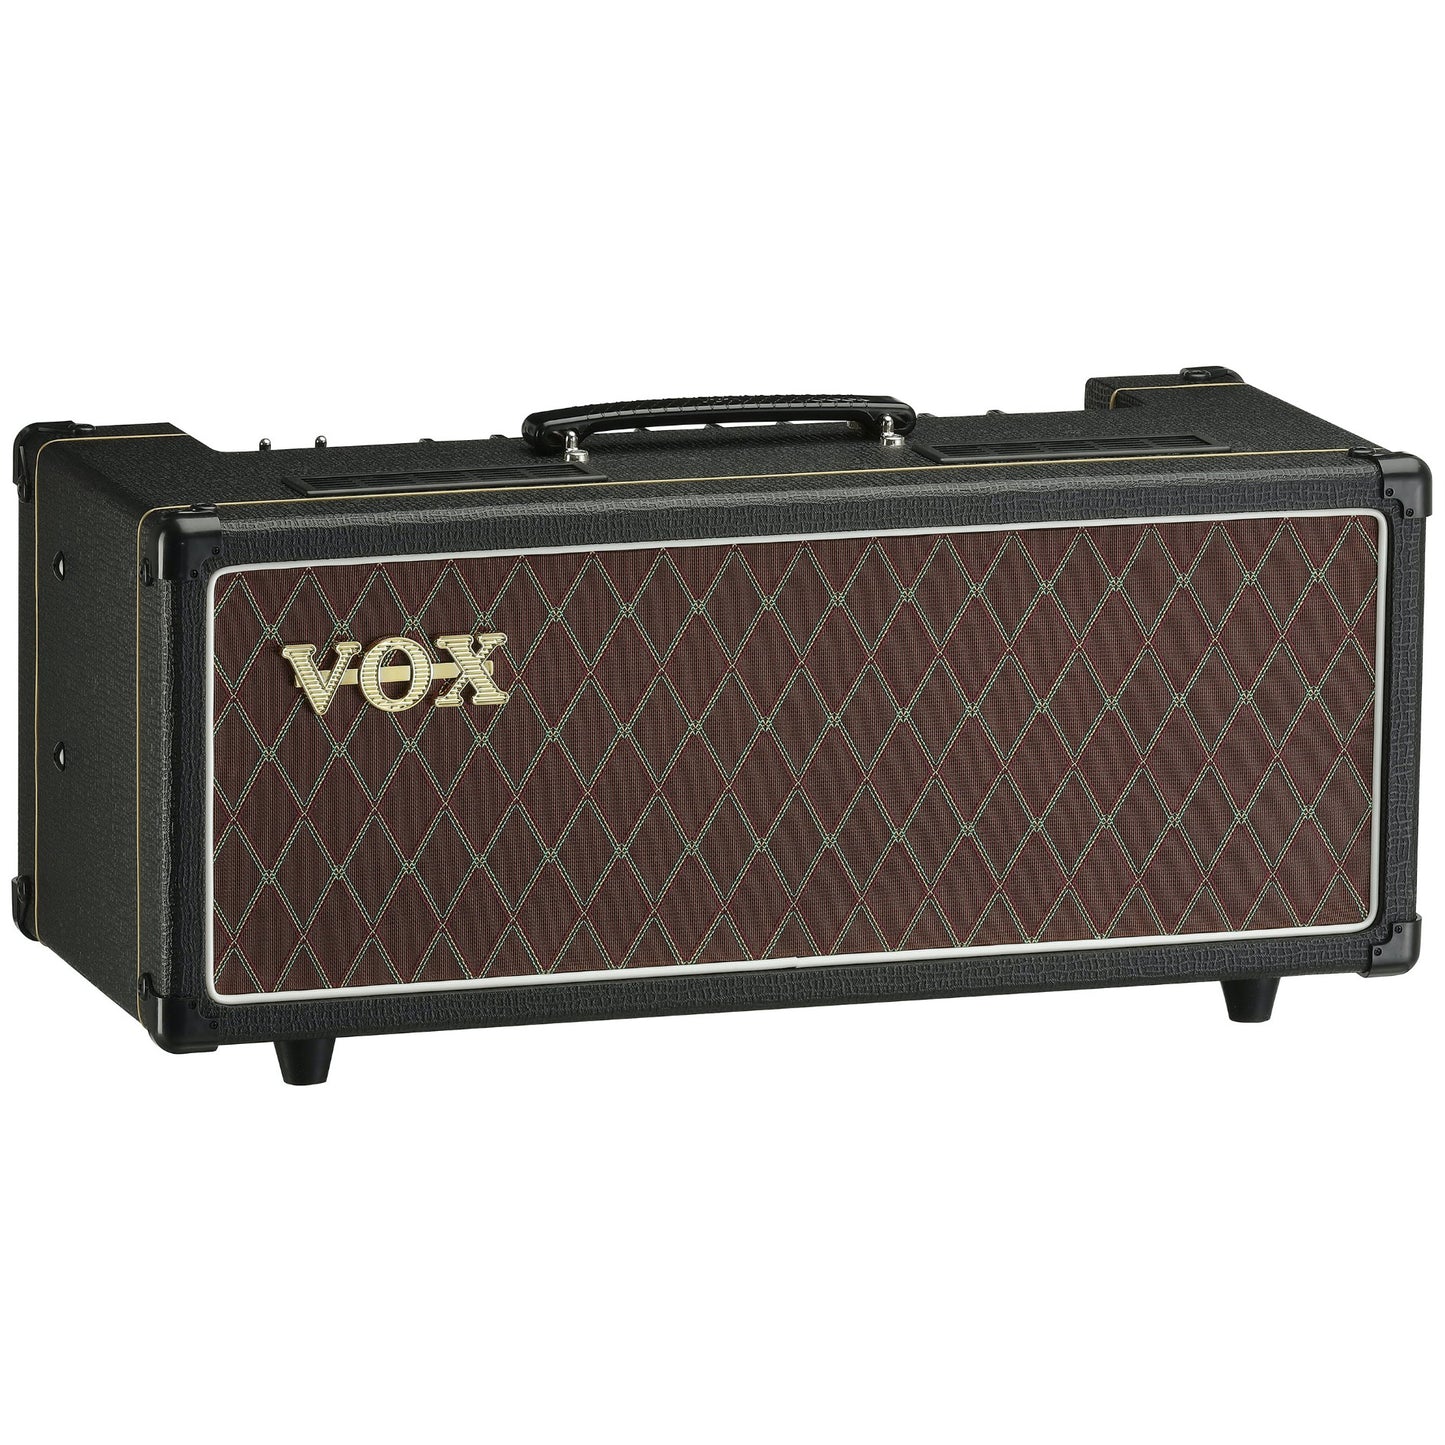 Vox AC15CH Custom Head 15-Watt Tube Amplifier